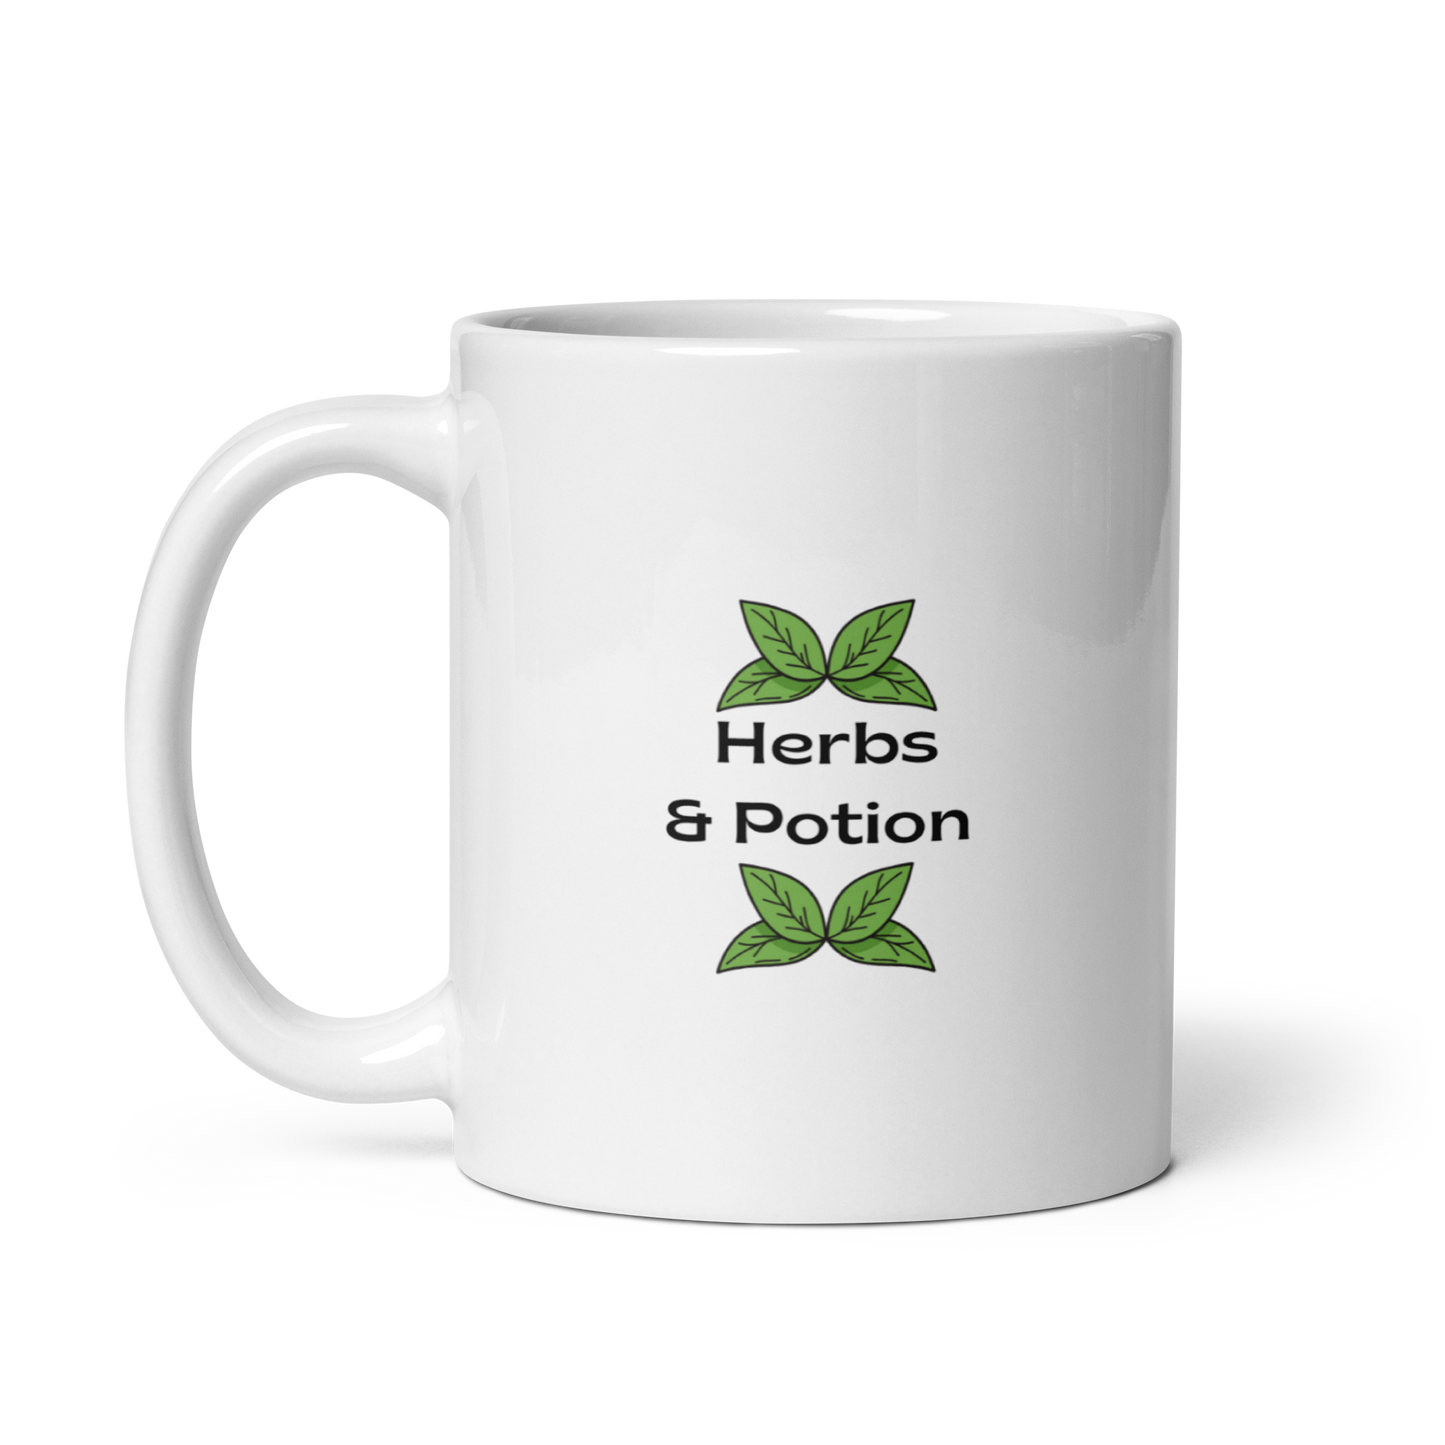 Herbs and Potion Mug